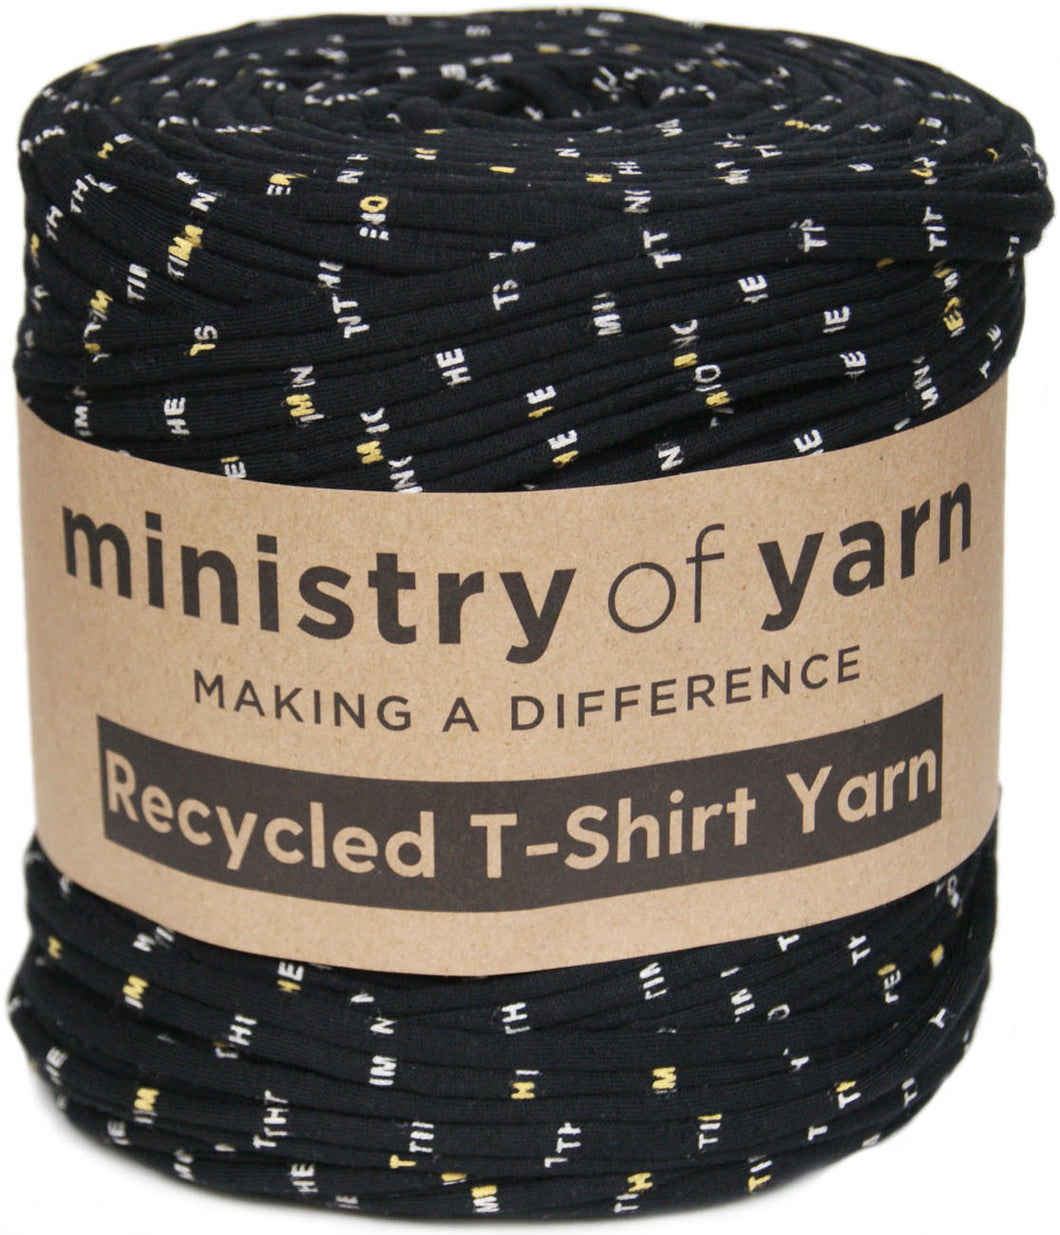 Black printed recycled t-shirt yarn Australia